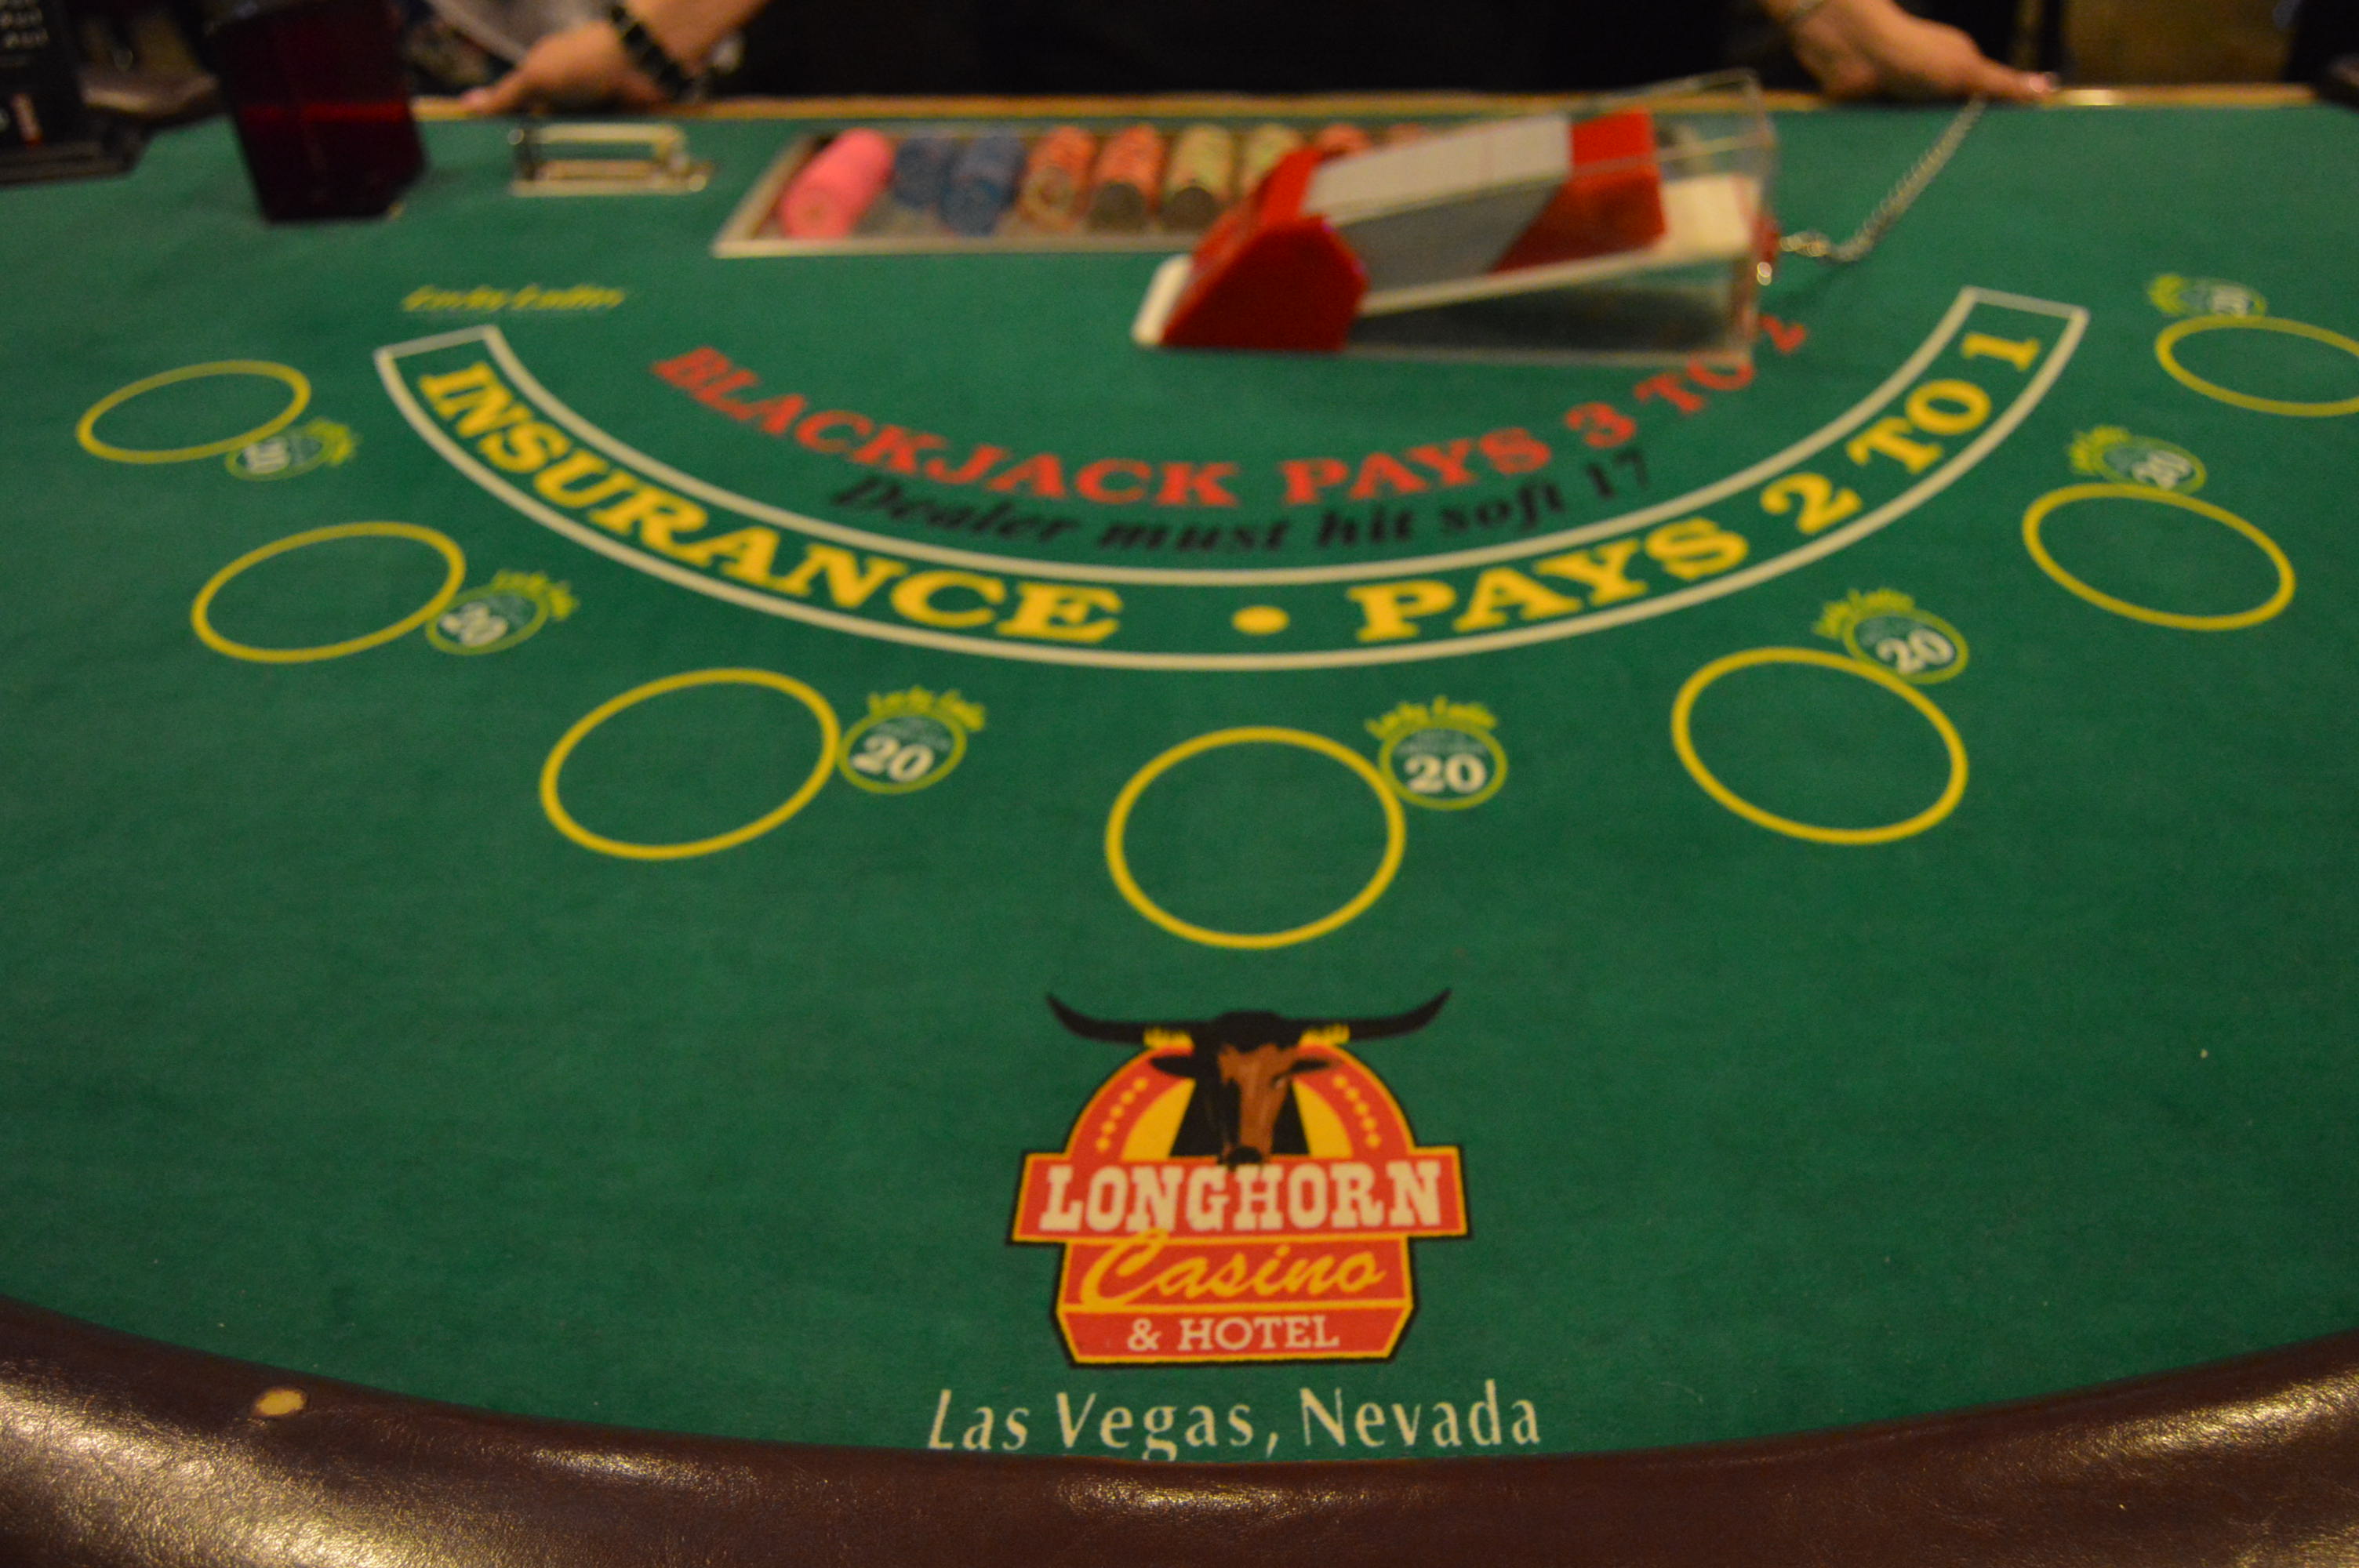 Blackjack ballroom casino sign up